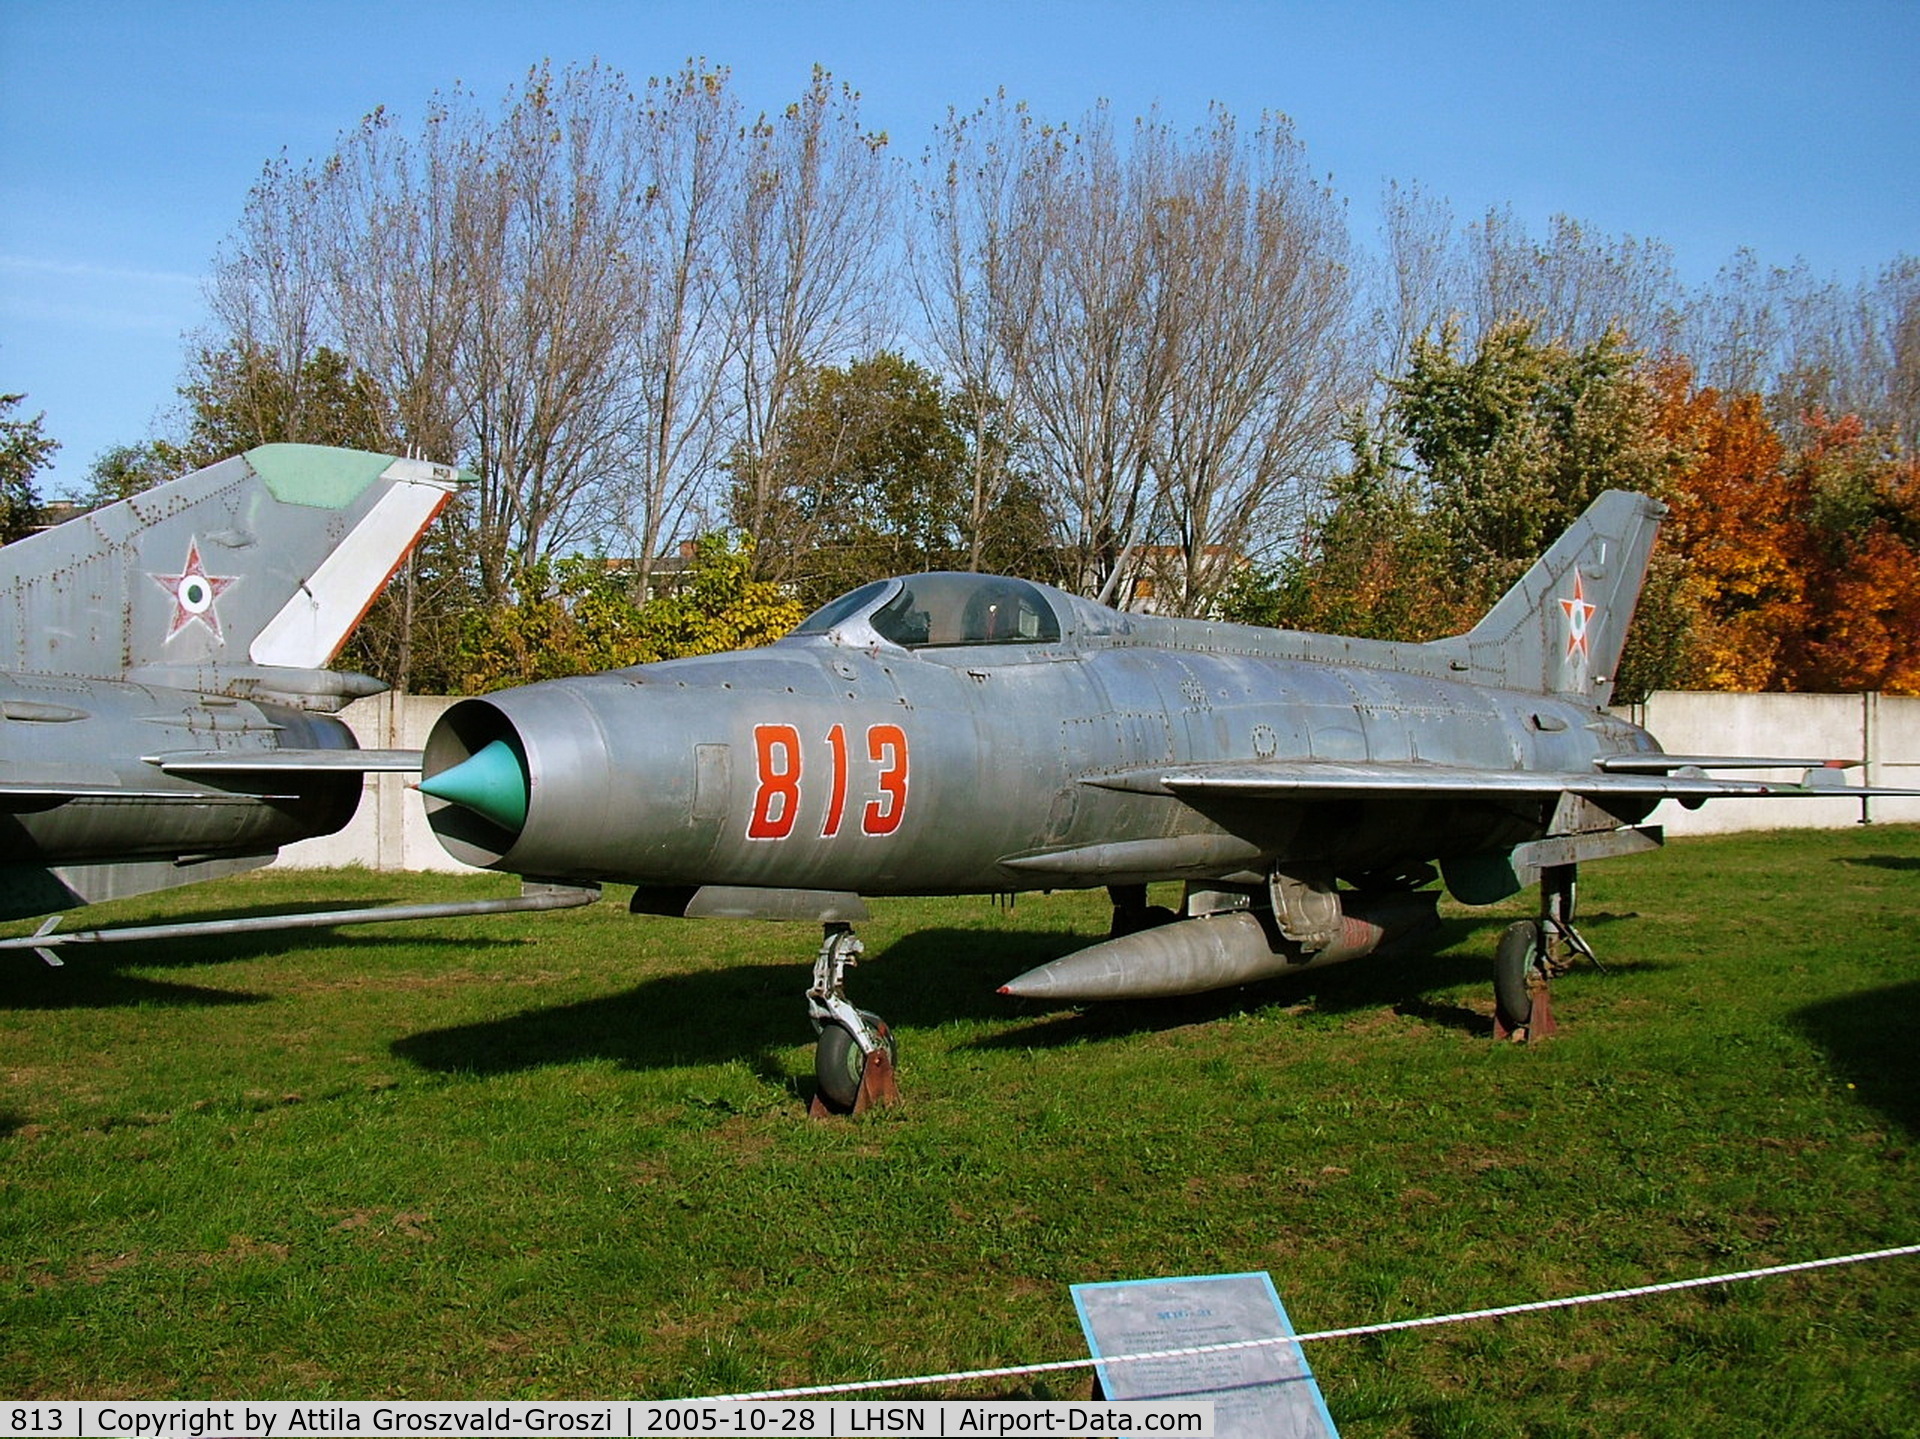 813, Mikoyan-Gurevich MiG-21F-13 C/N 741813, Szolnok airplane museum, Hungary